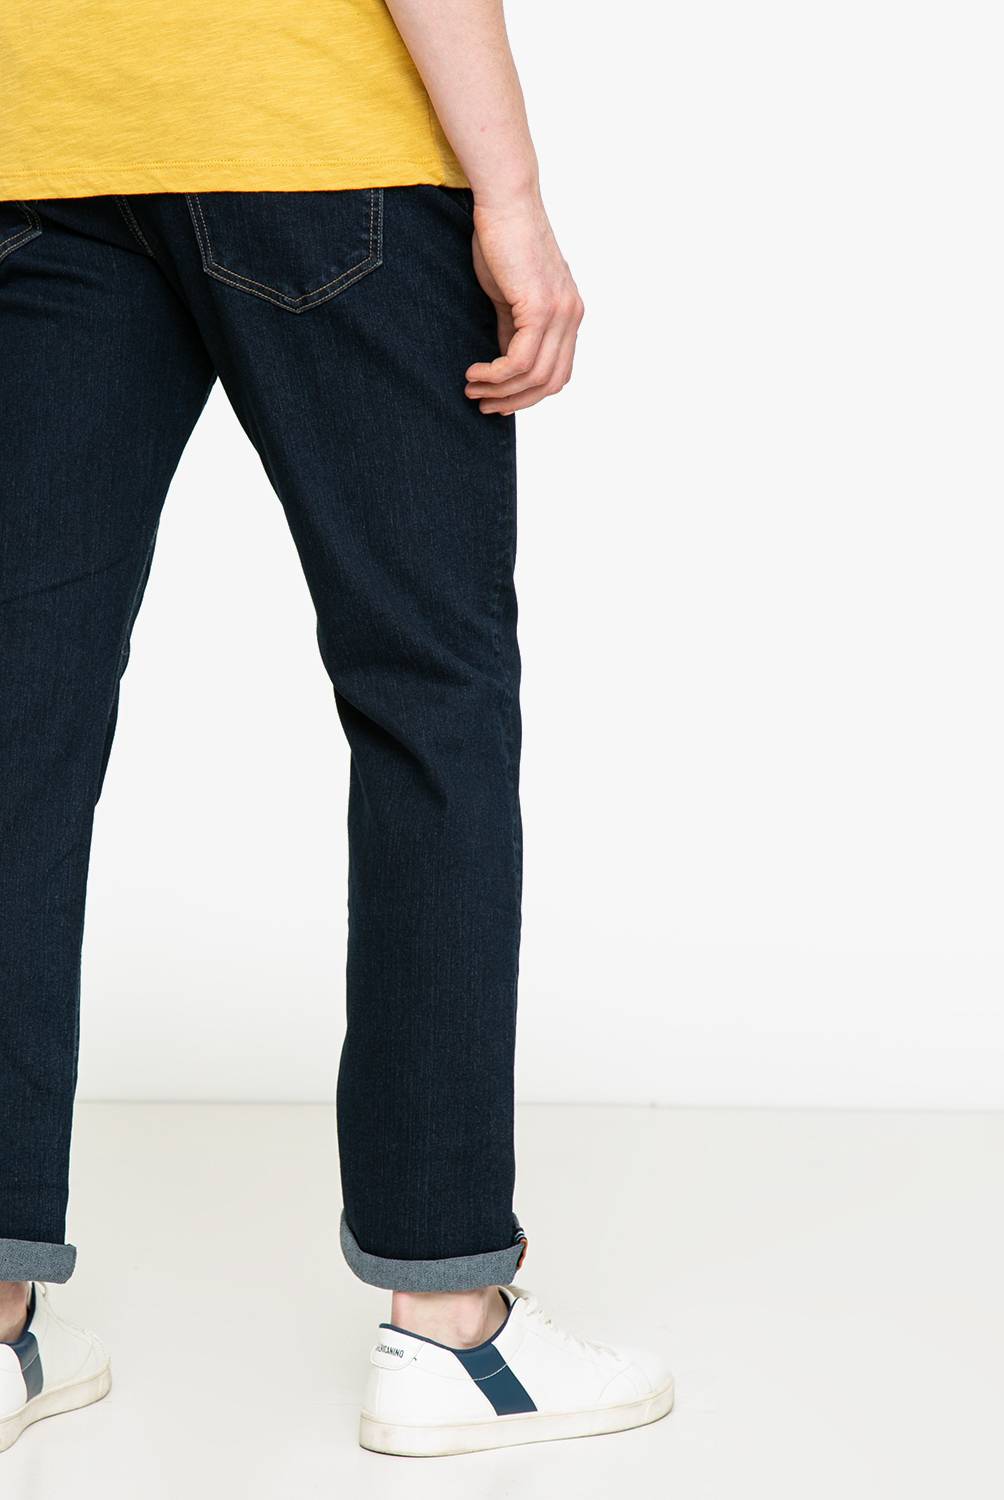 Americanino - Jeans Slim Fit Hombre